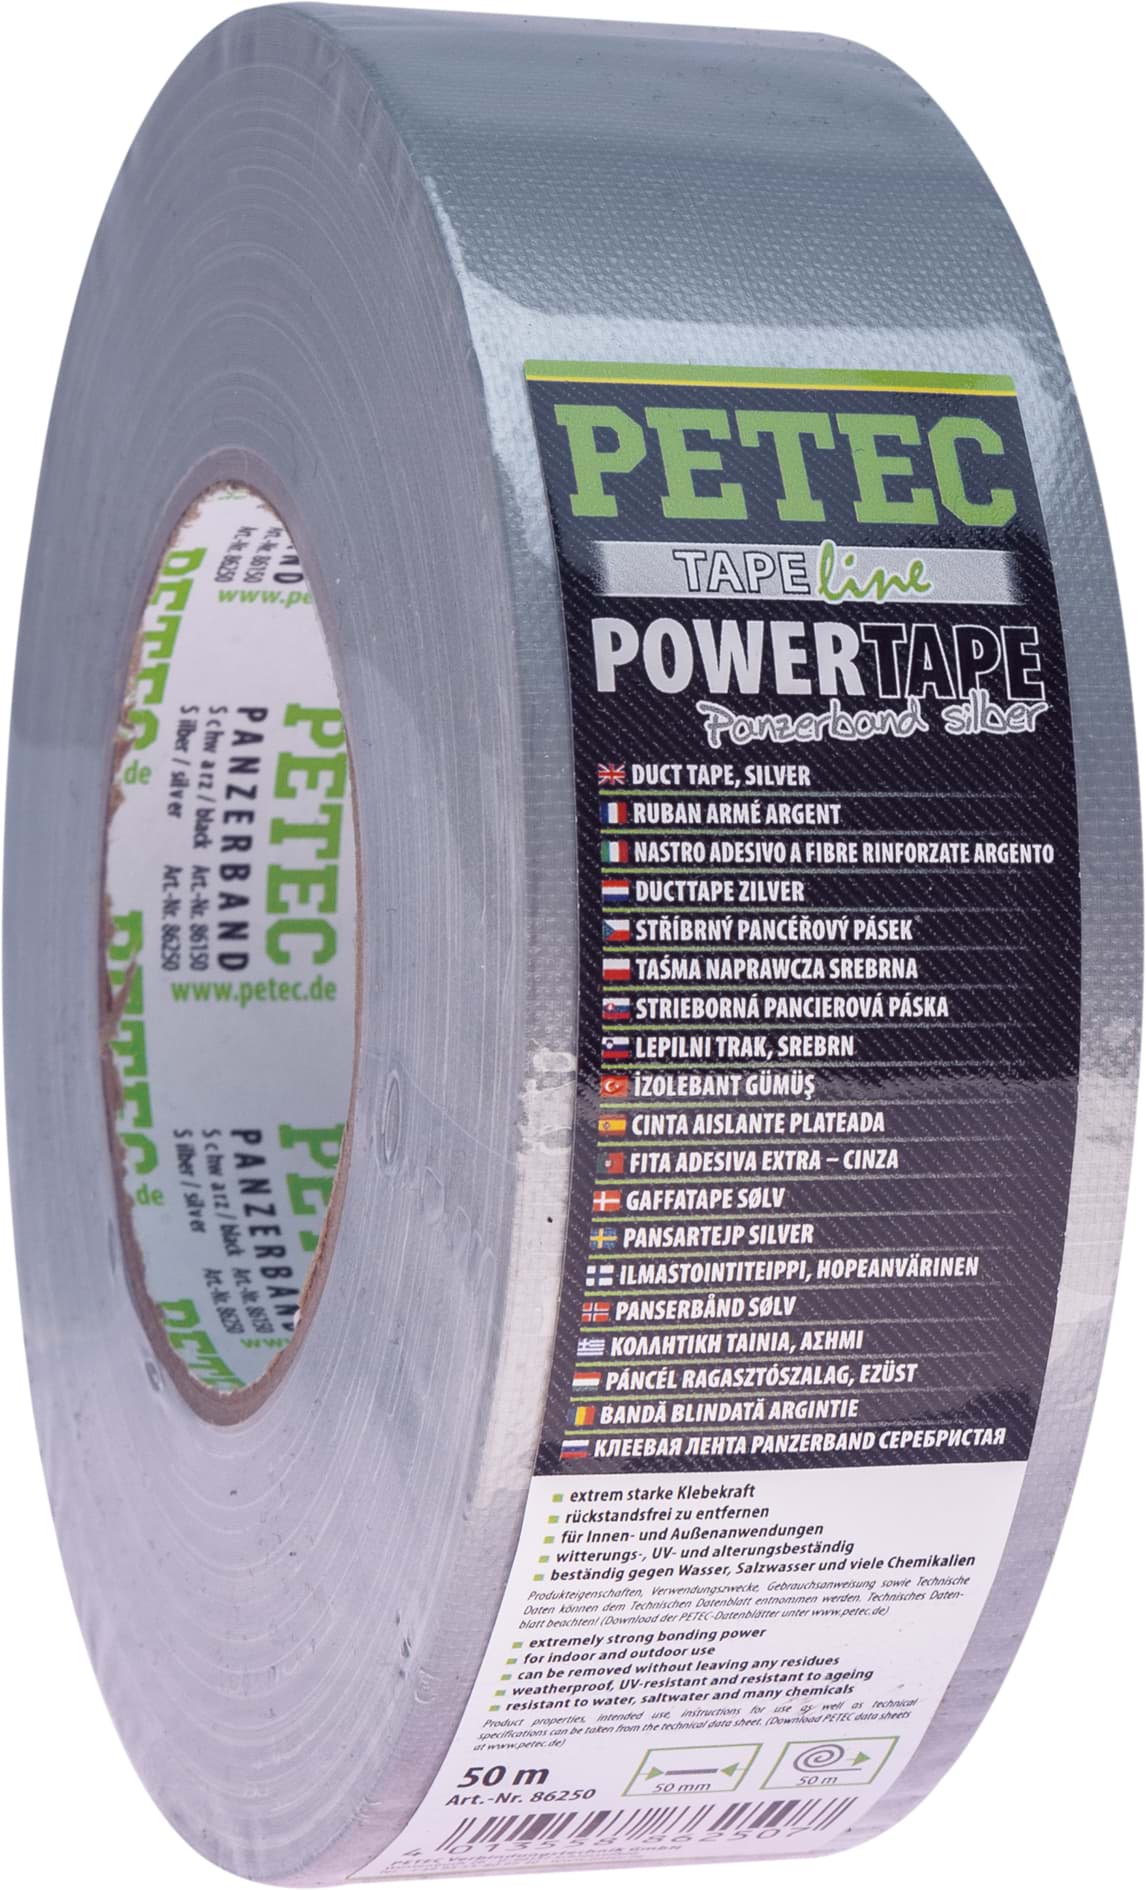 Petec Power Tape Panzerband silber 50m resmi